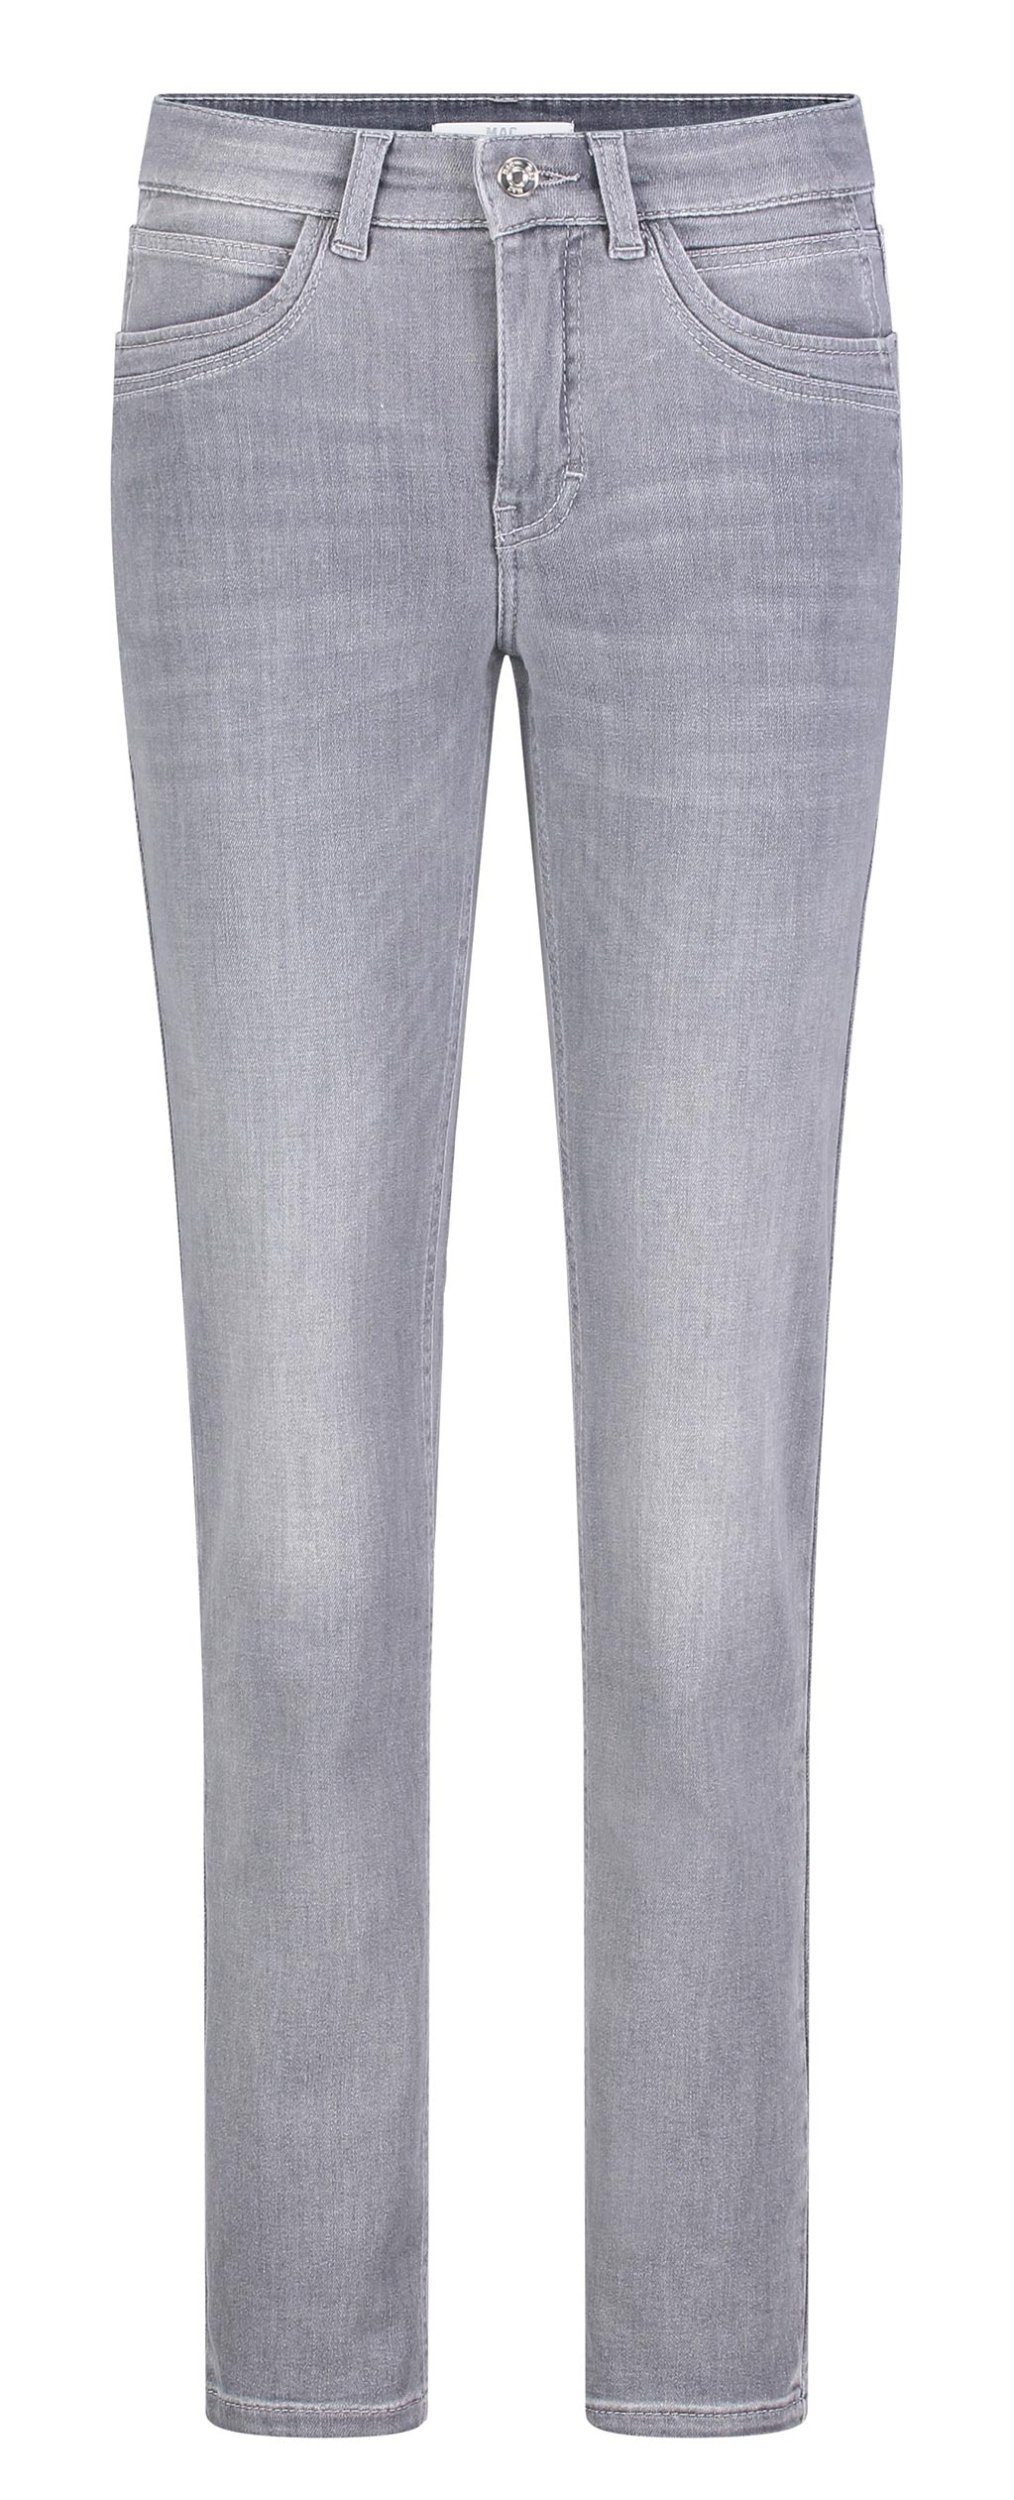 JEANS - ANGELA Light new, denim authentic 5-Pocket-Jeans MAC